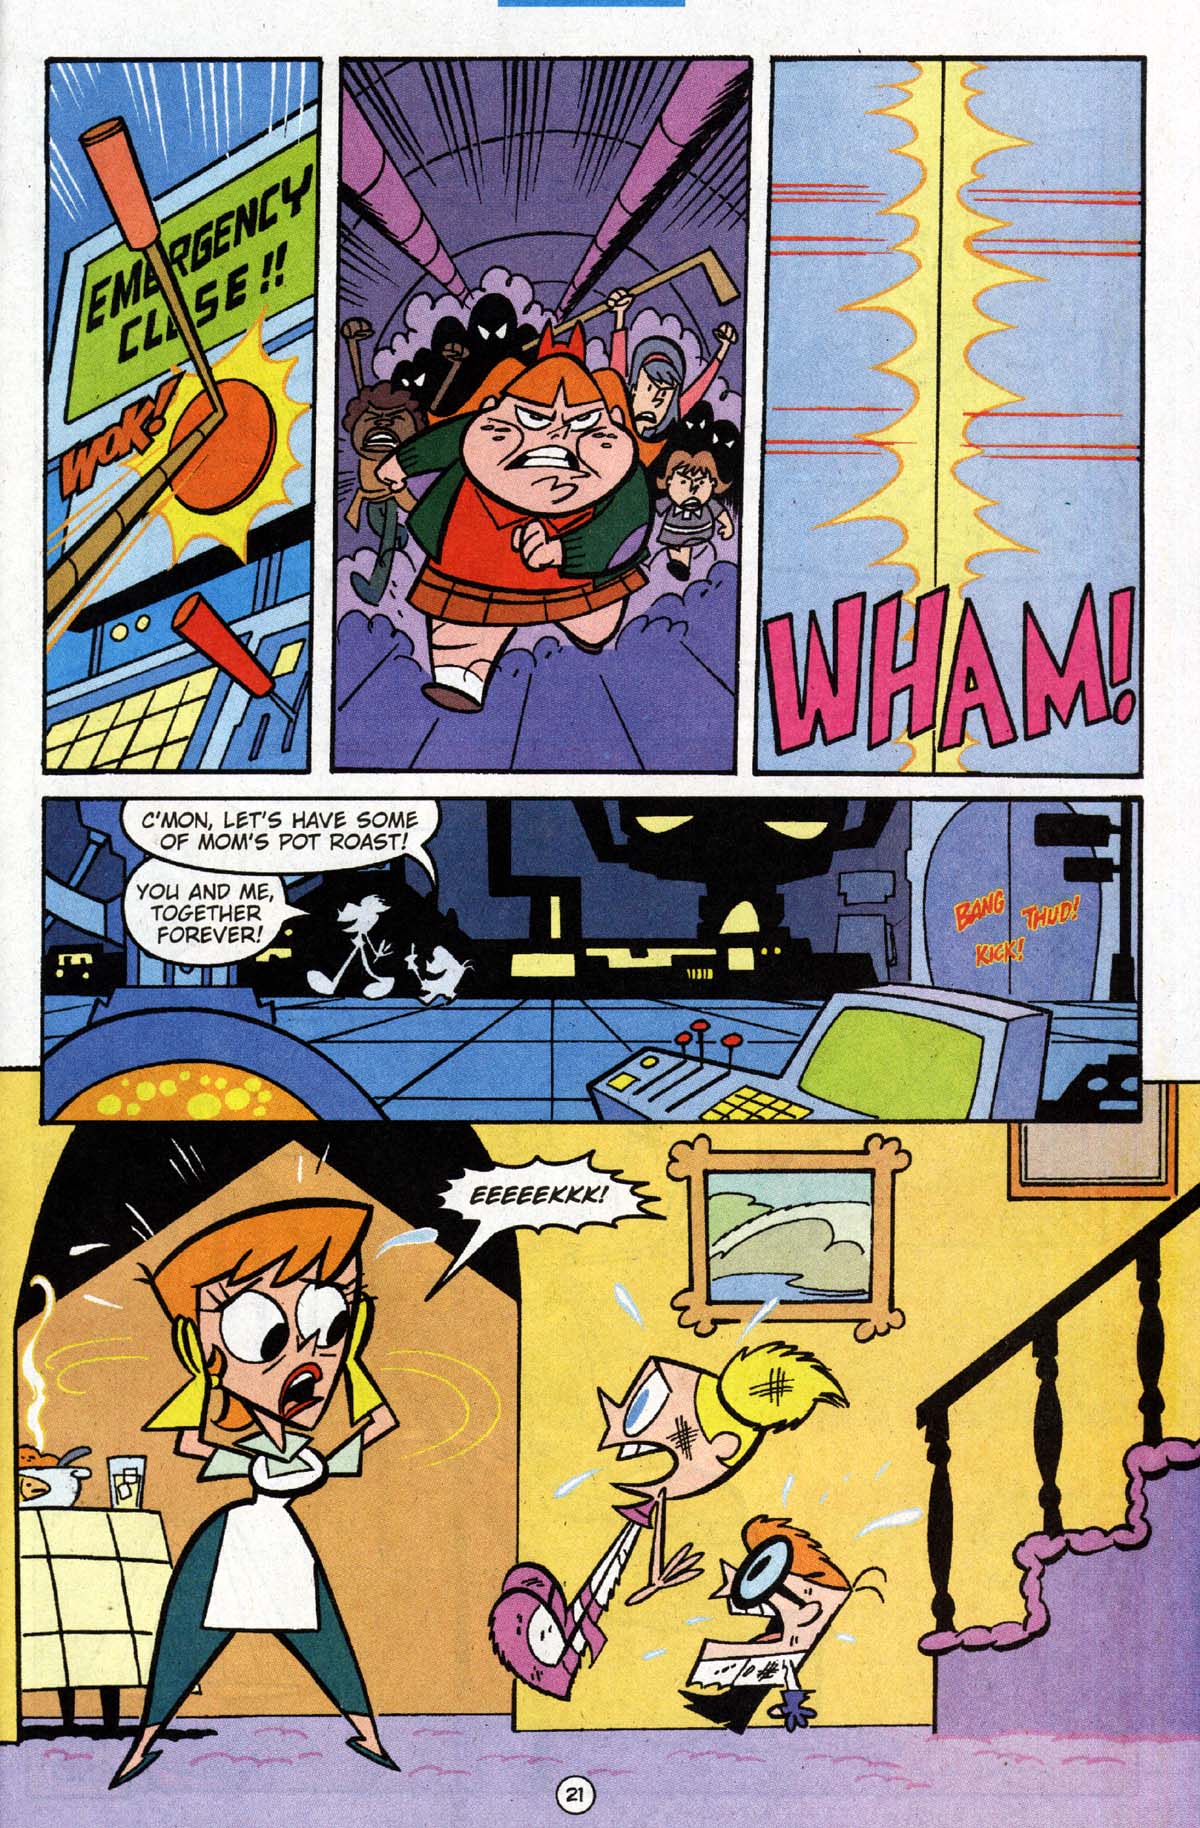 Dexter S Laboratory Issue 33 Read Dexter S Laboratory Issue 33 Comic